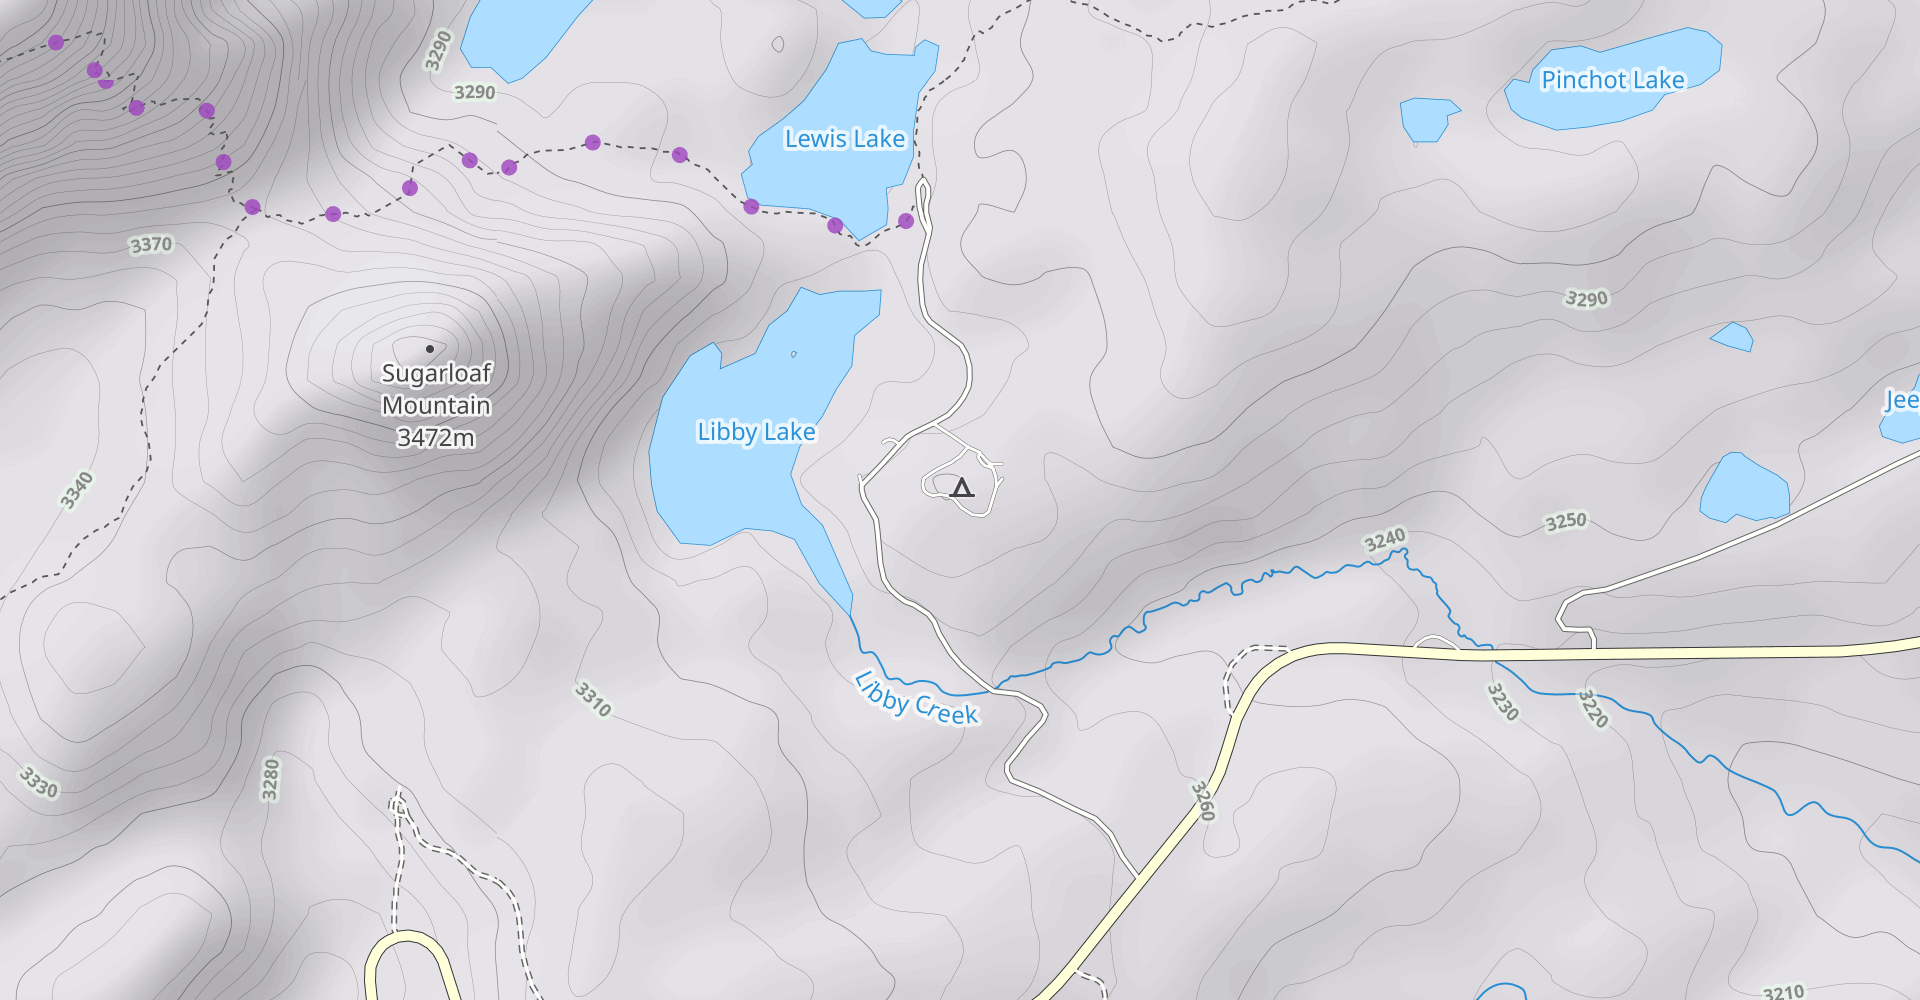 Lewis Lake, Medicine Bow Peak and South Gap Lake Loop